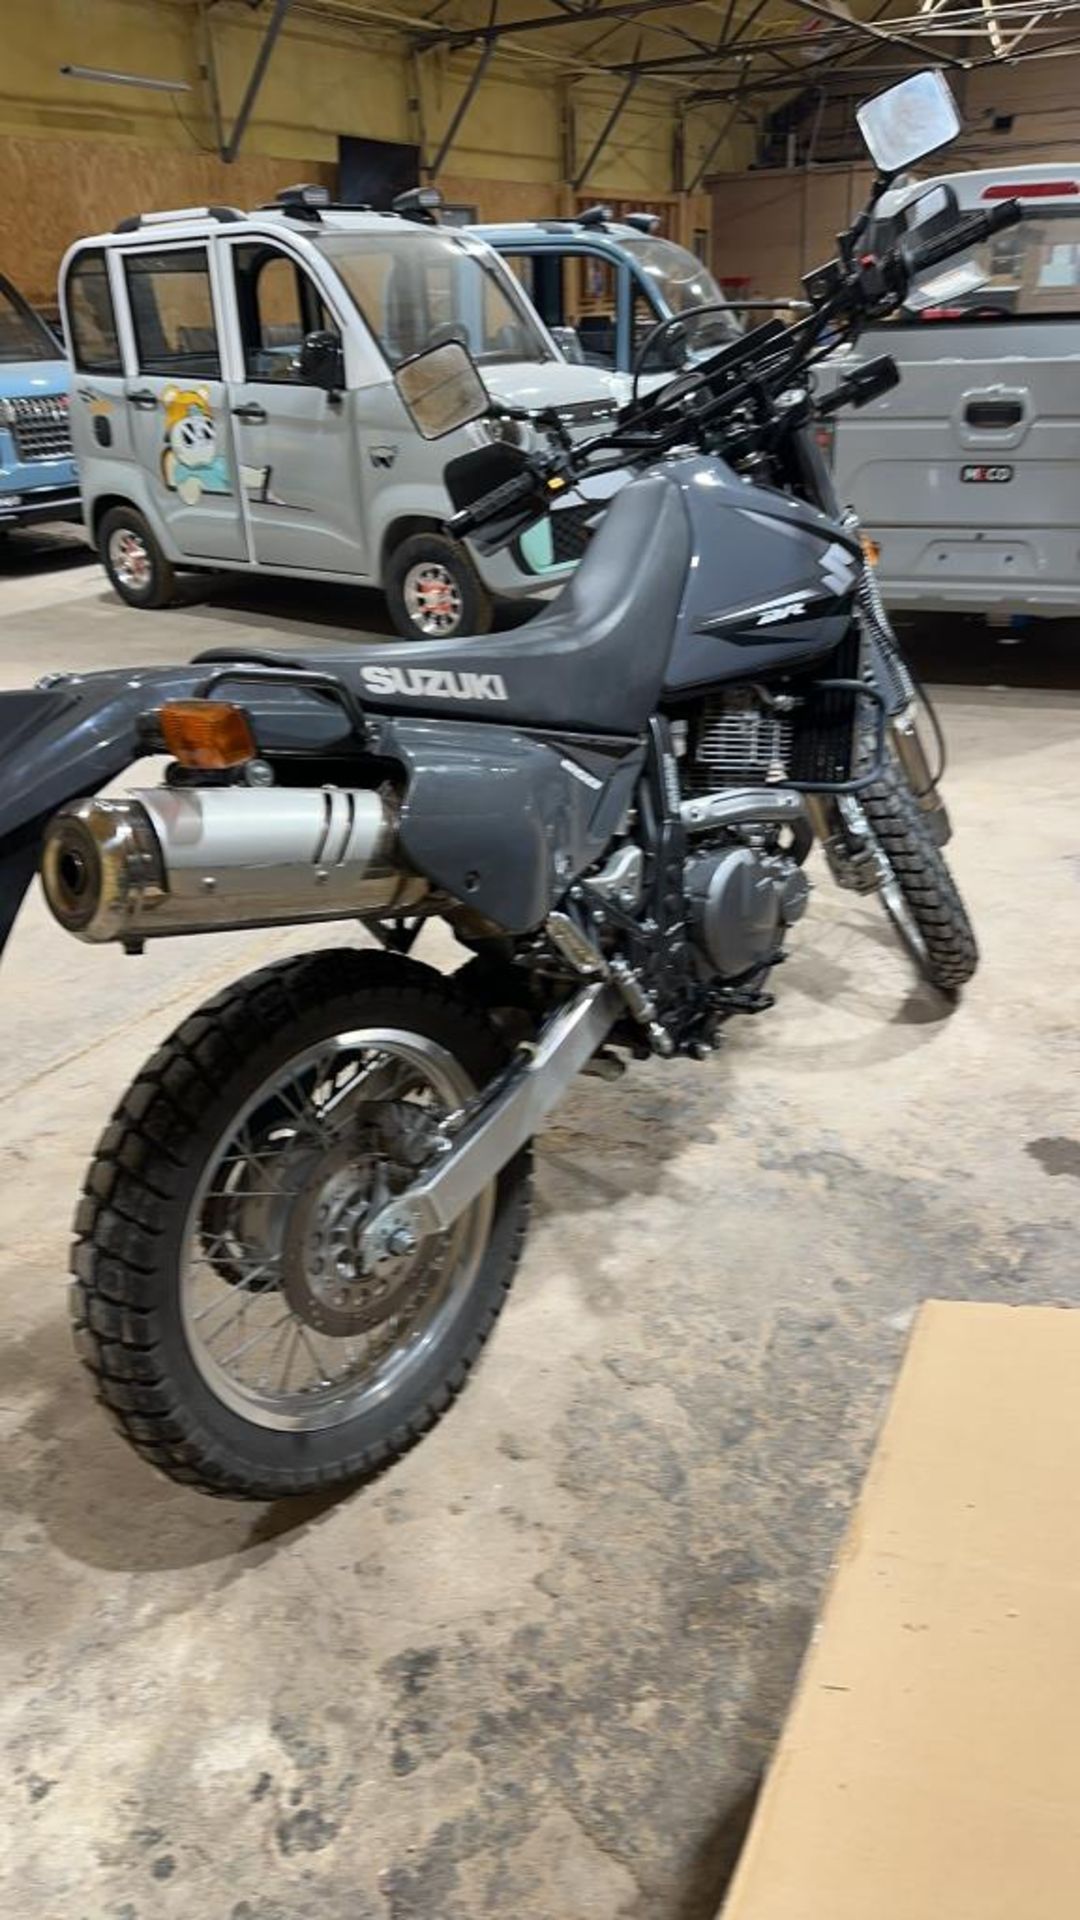 2012 Suzuki DR650S motorcycle - Image 16 of 36